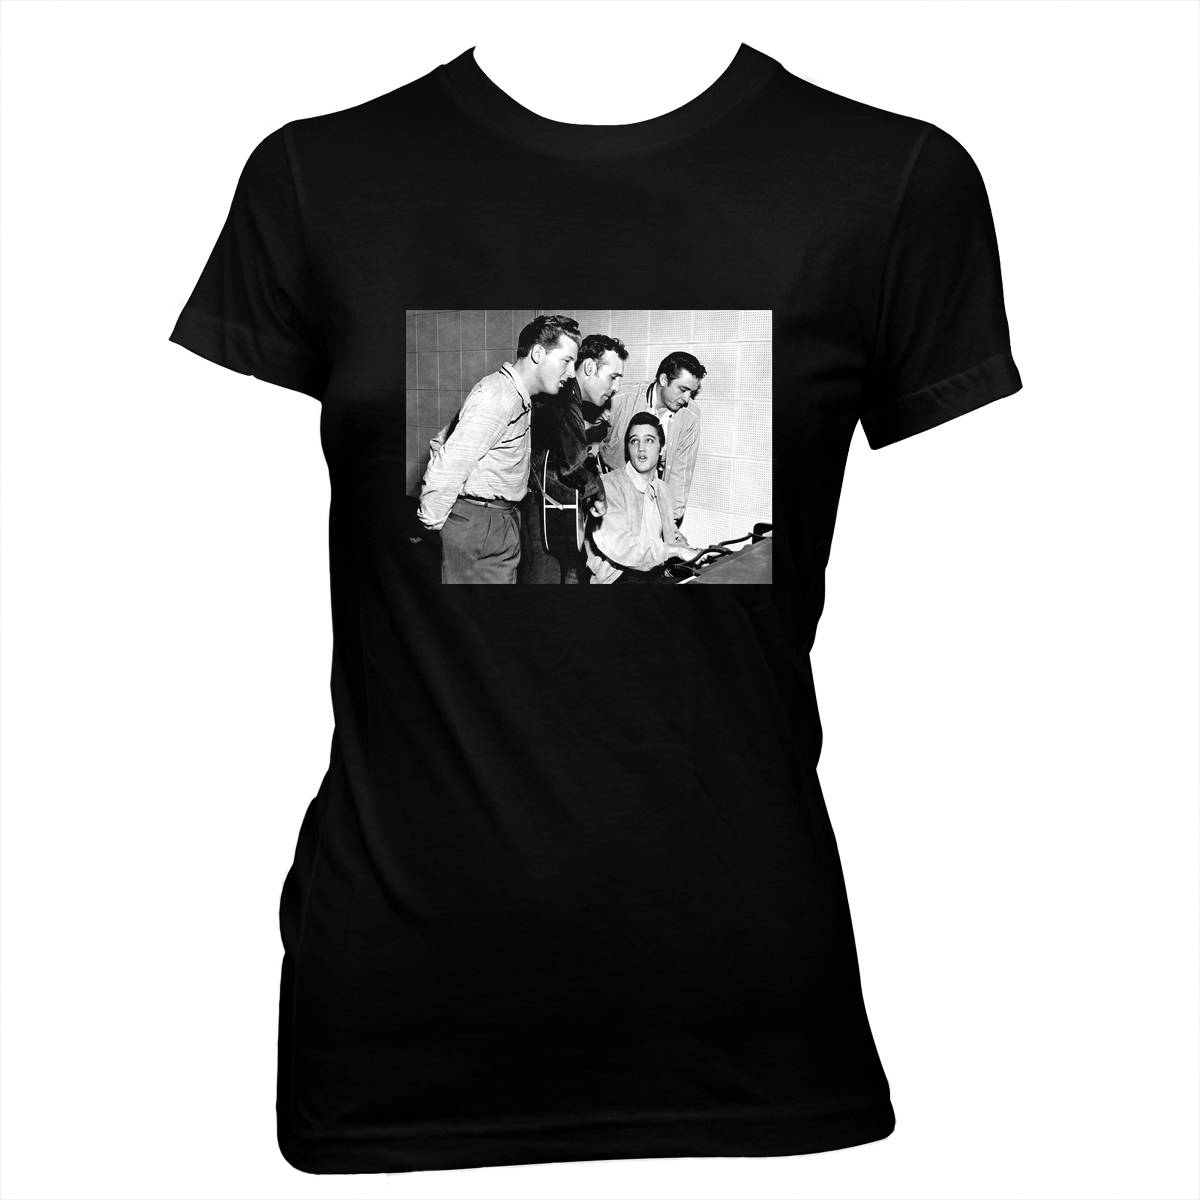 Discover Million Dollar Quartet - Elvis Presley T-Shirt